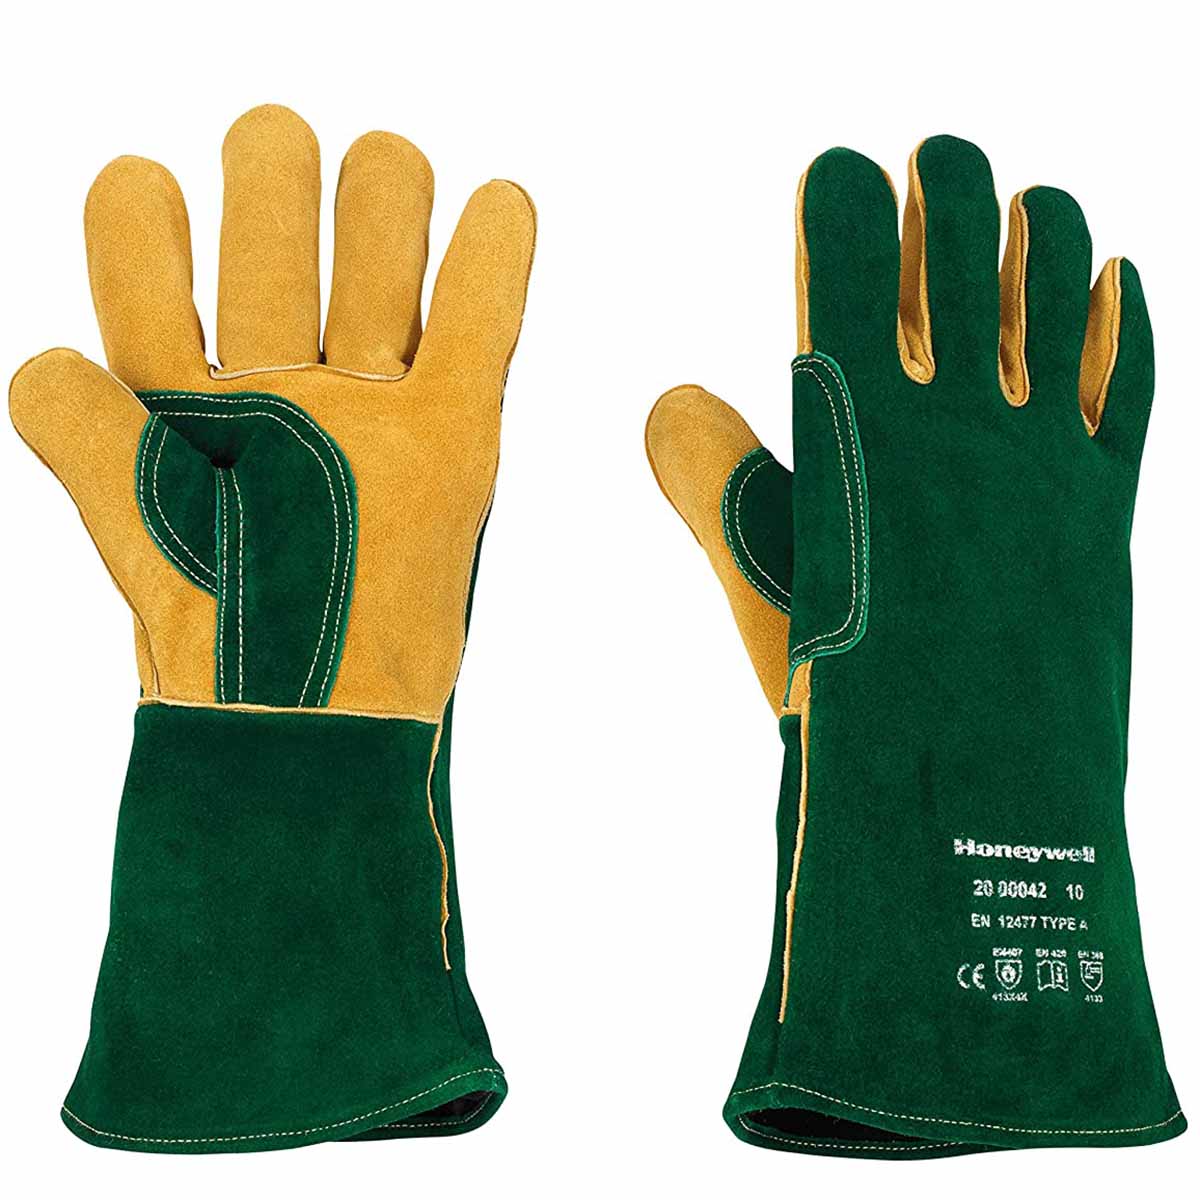 Honeywell 2000042 Green Welding Plus Gauntlet Gloves Size 8